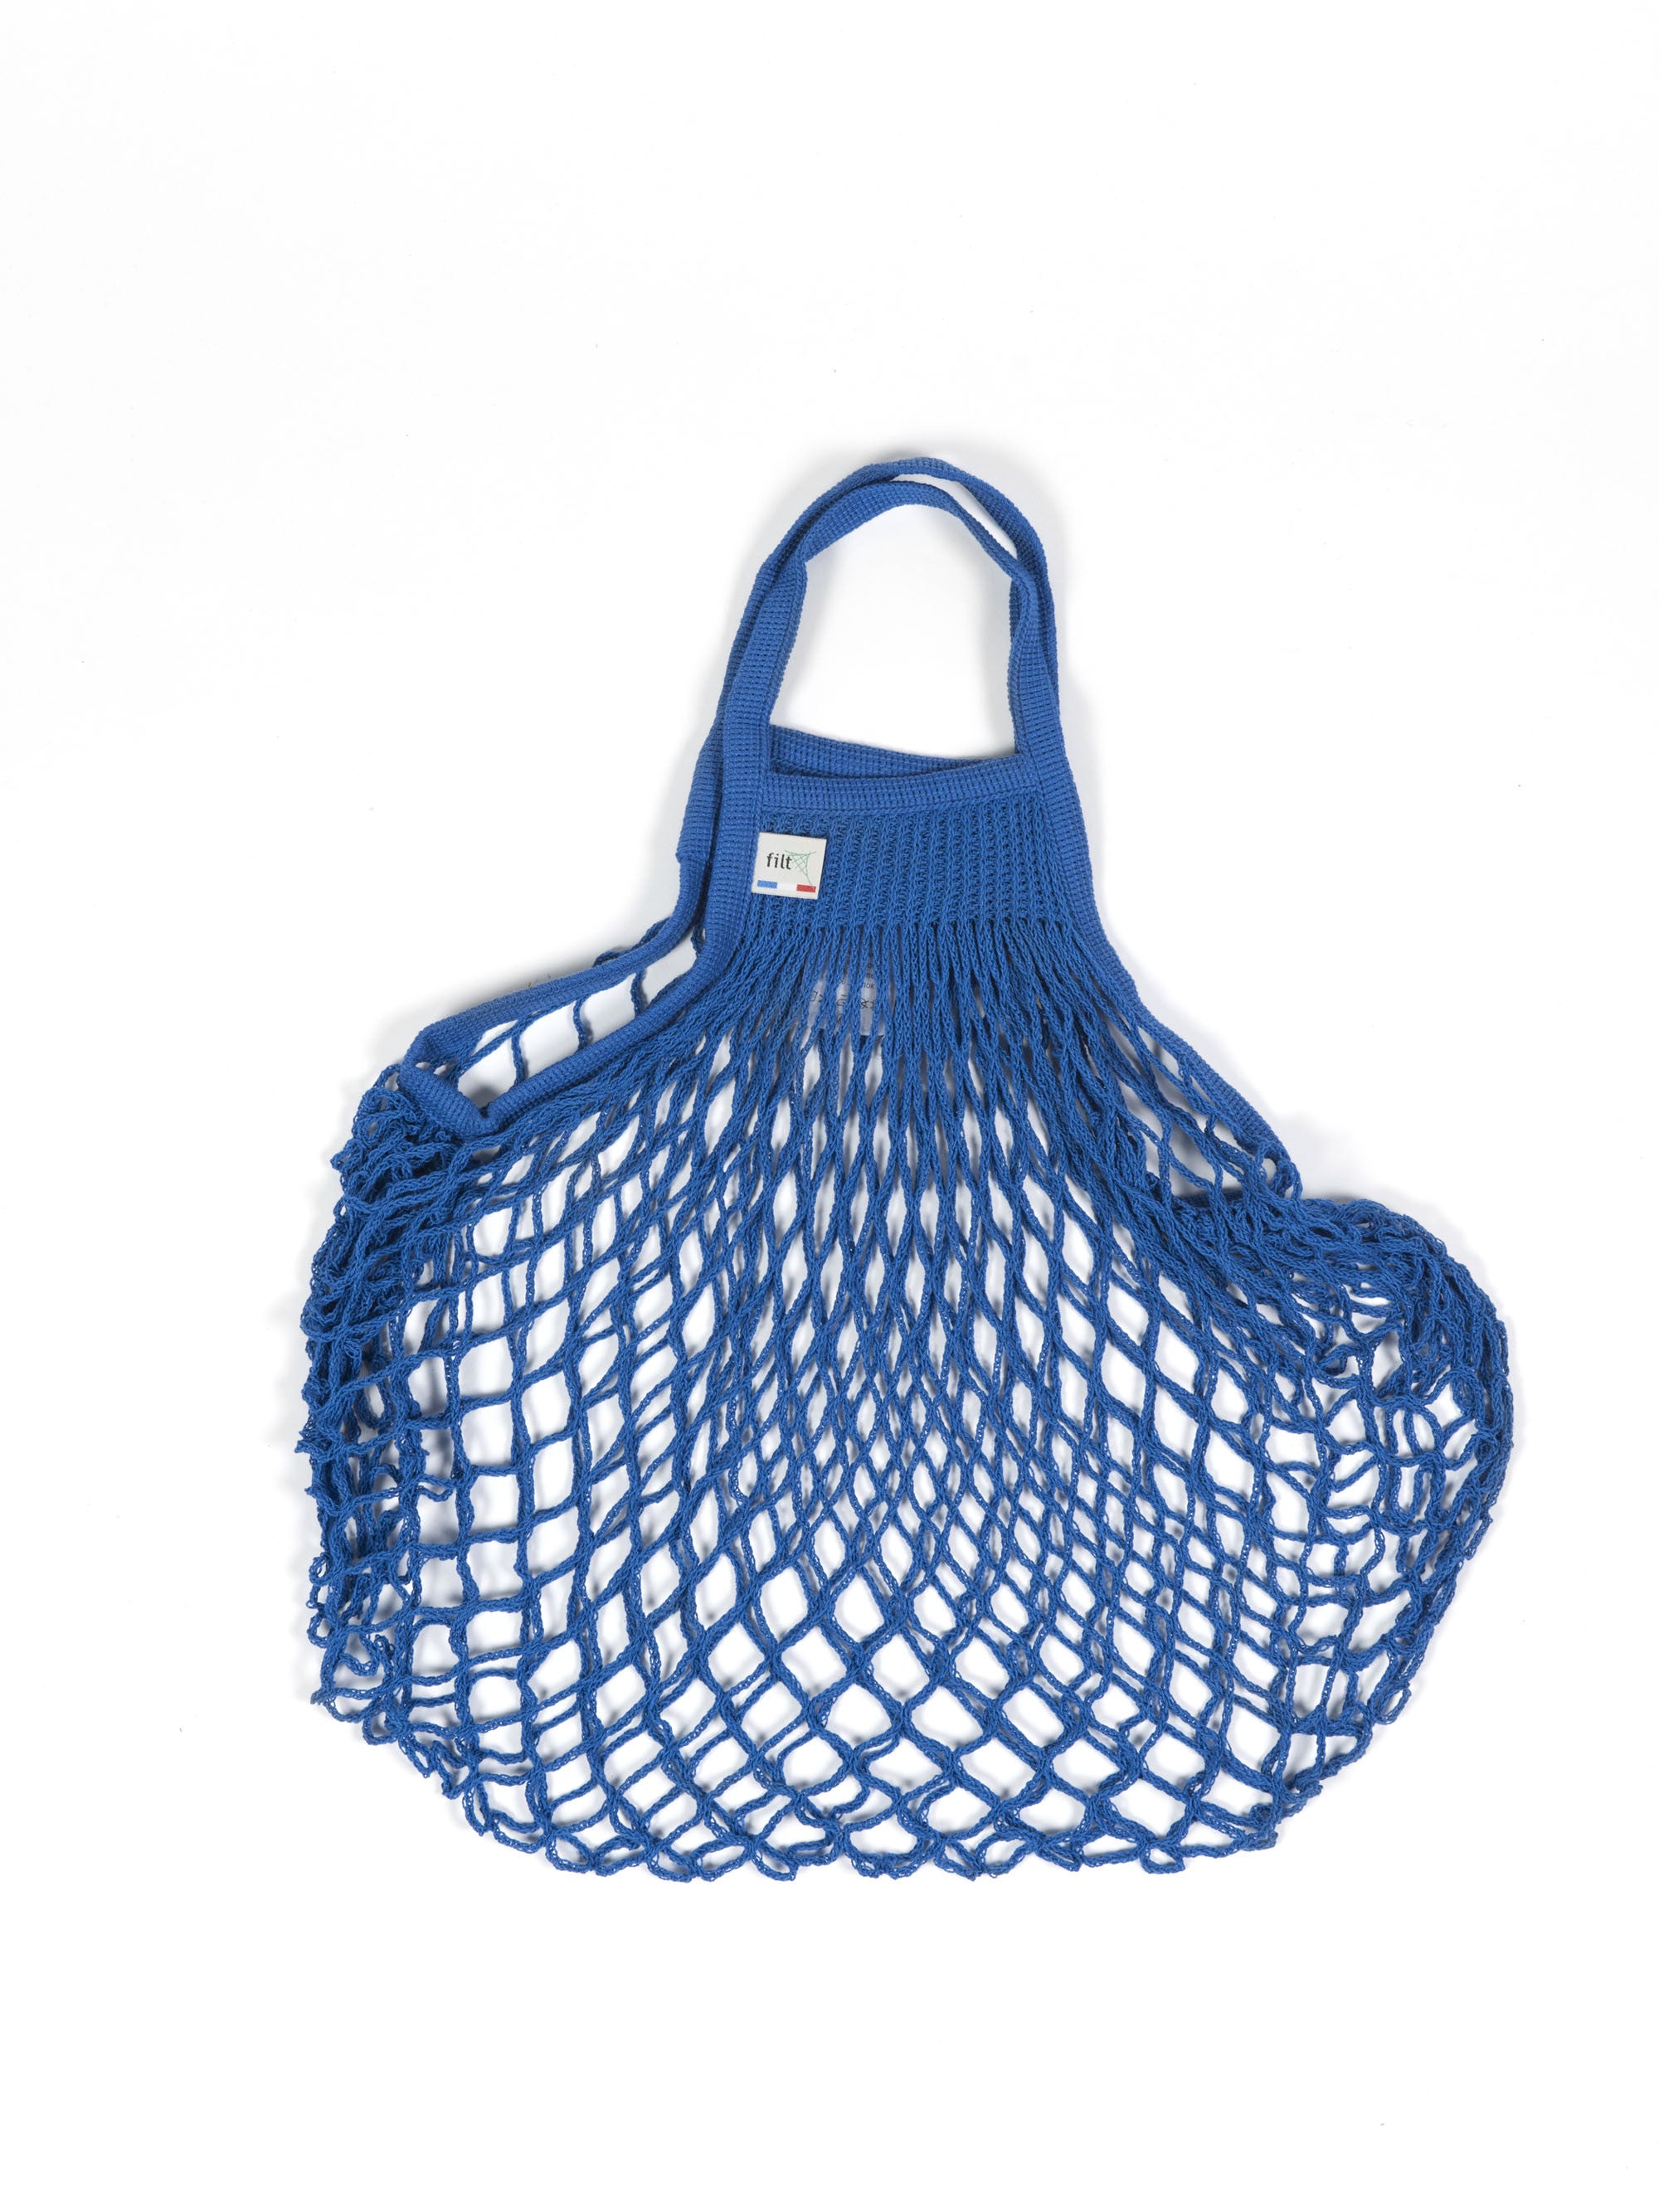 Filt Mini Bag in Bright Blue Bag Filt Bags Brand_Filt Shopping Bags Textiles_Shoppers 2200-301BMSm_Mini_Bright_Blue